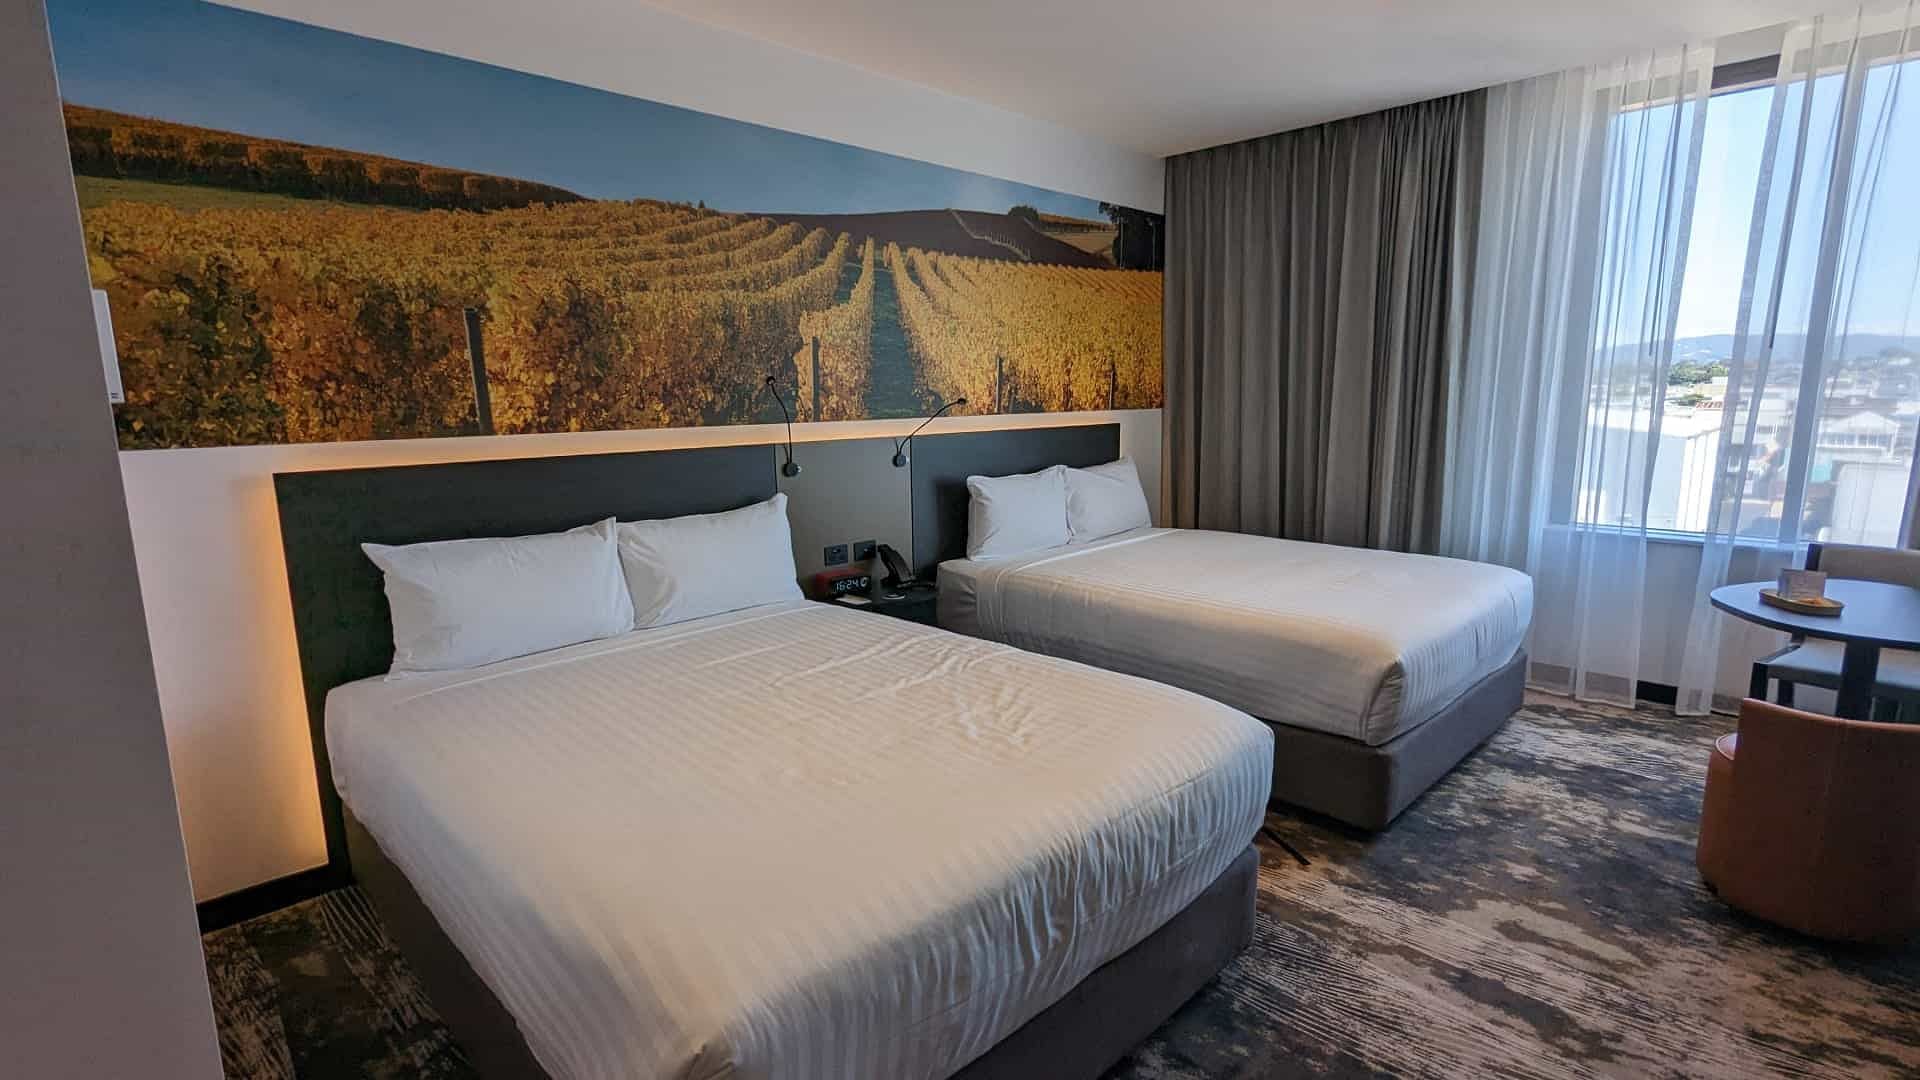 novotel hotel standard room review